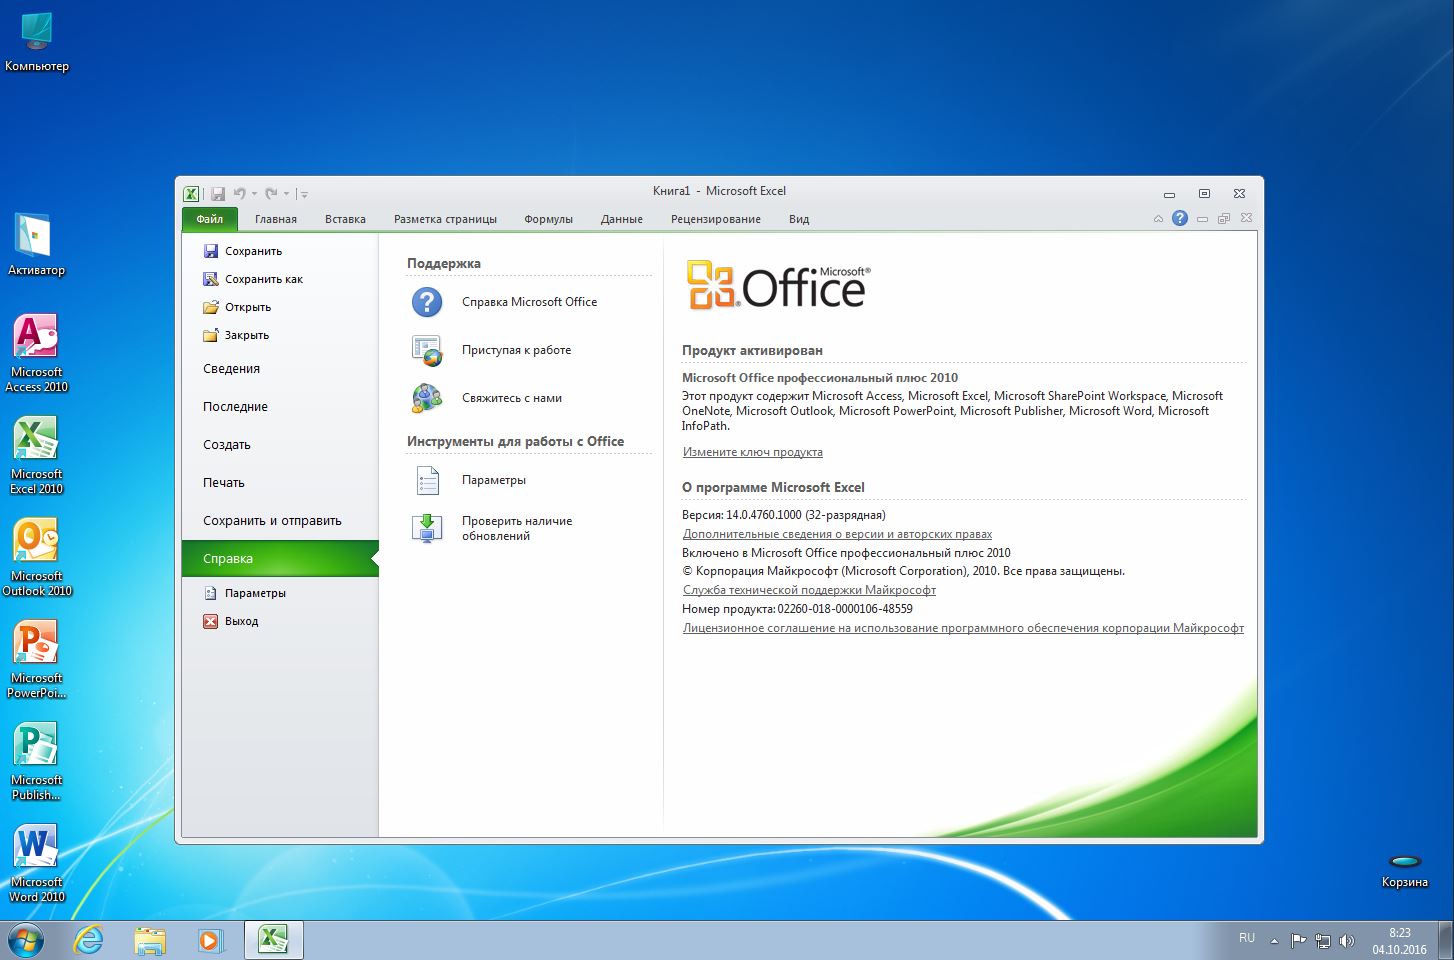 Версии офиса для виндовс. Microsoft Office 2010. Windows Office 2010. Виндовс 7 2010. Windows 2010 года.